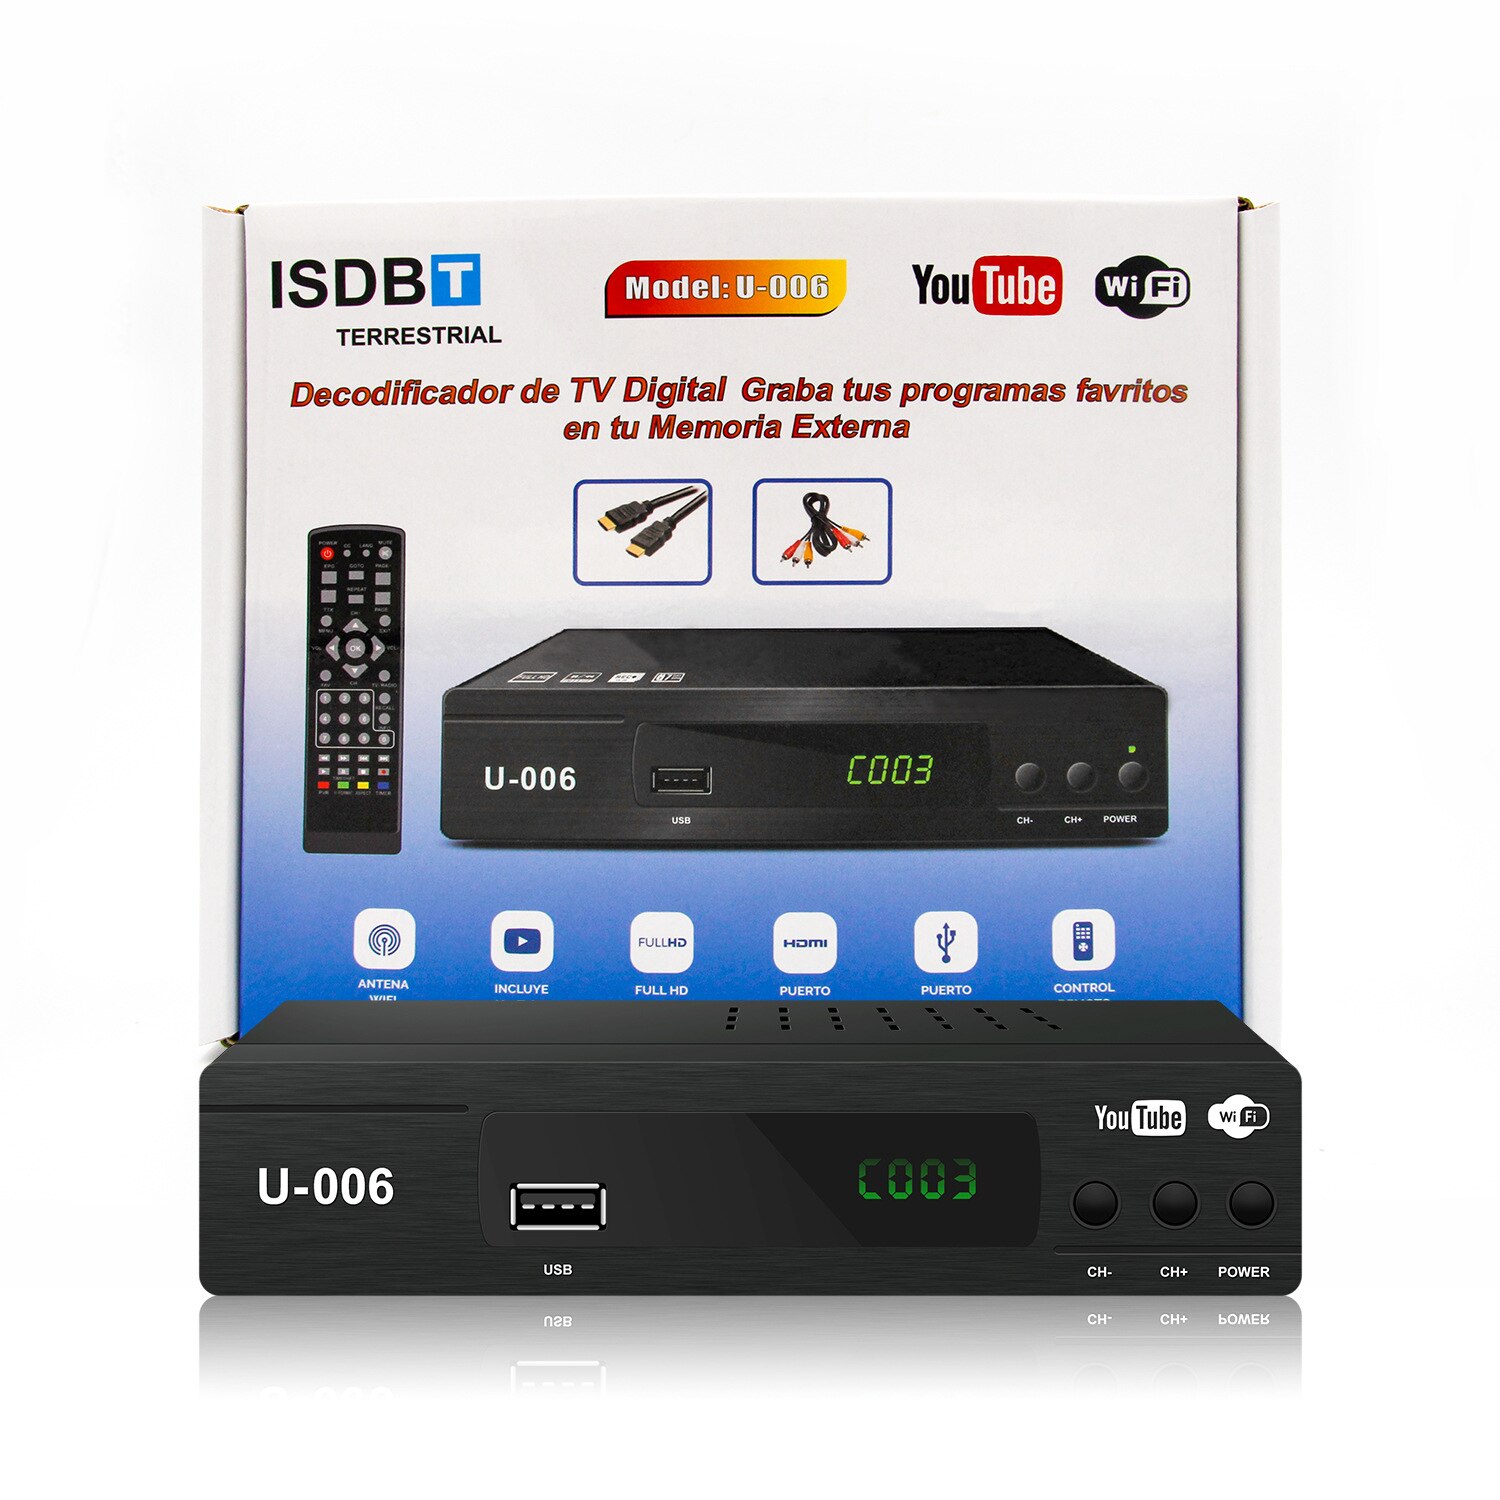 Convertidor A Smart Tv Box Plus Con Tdt Full Hd Ho